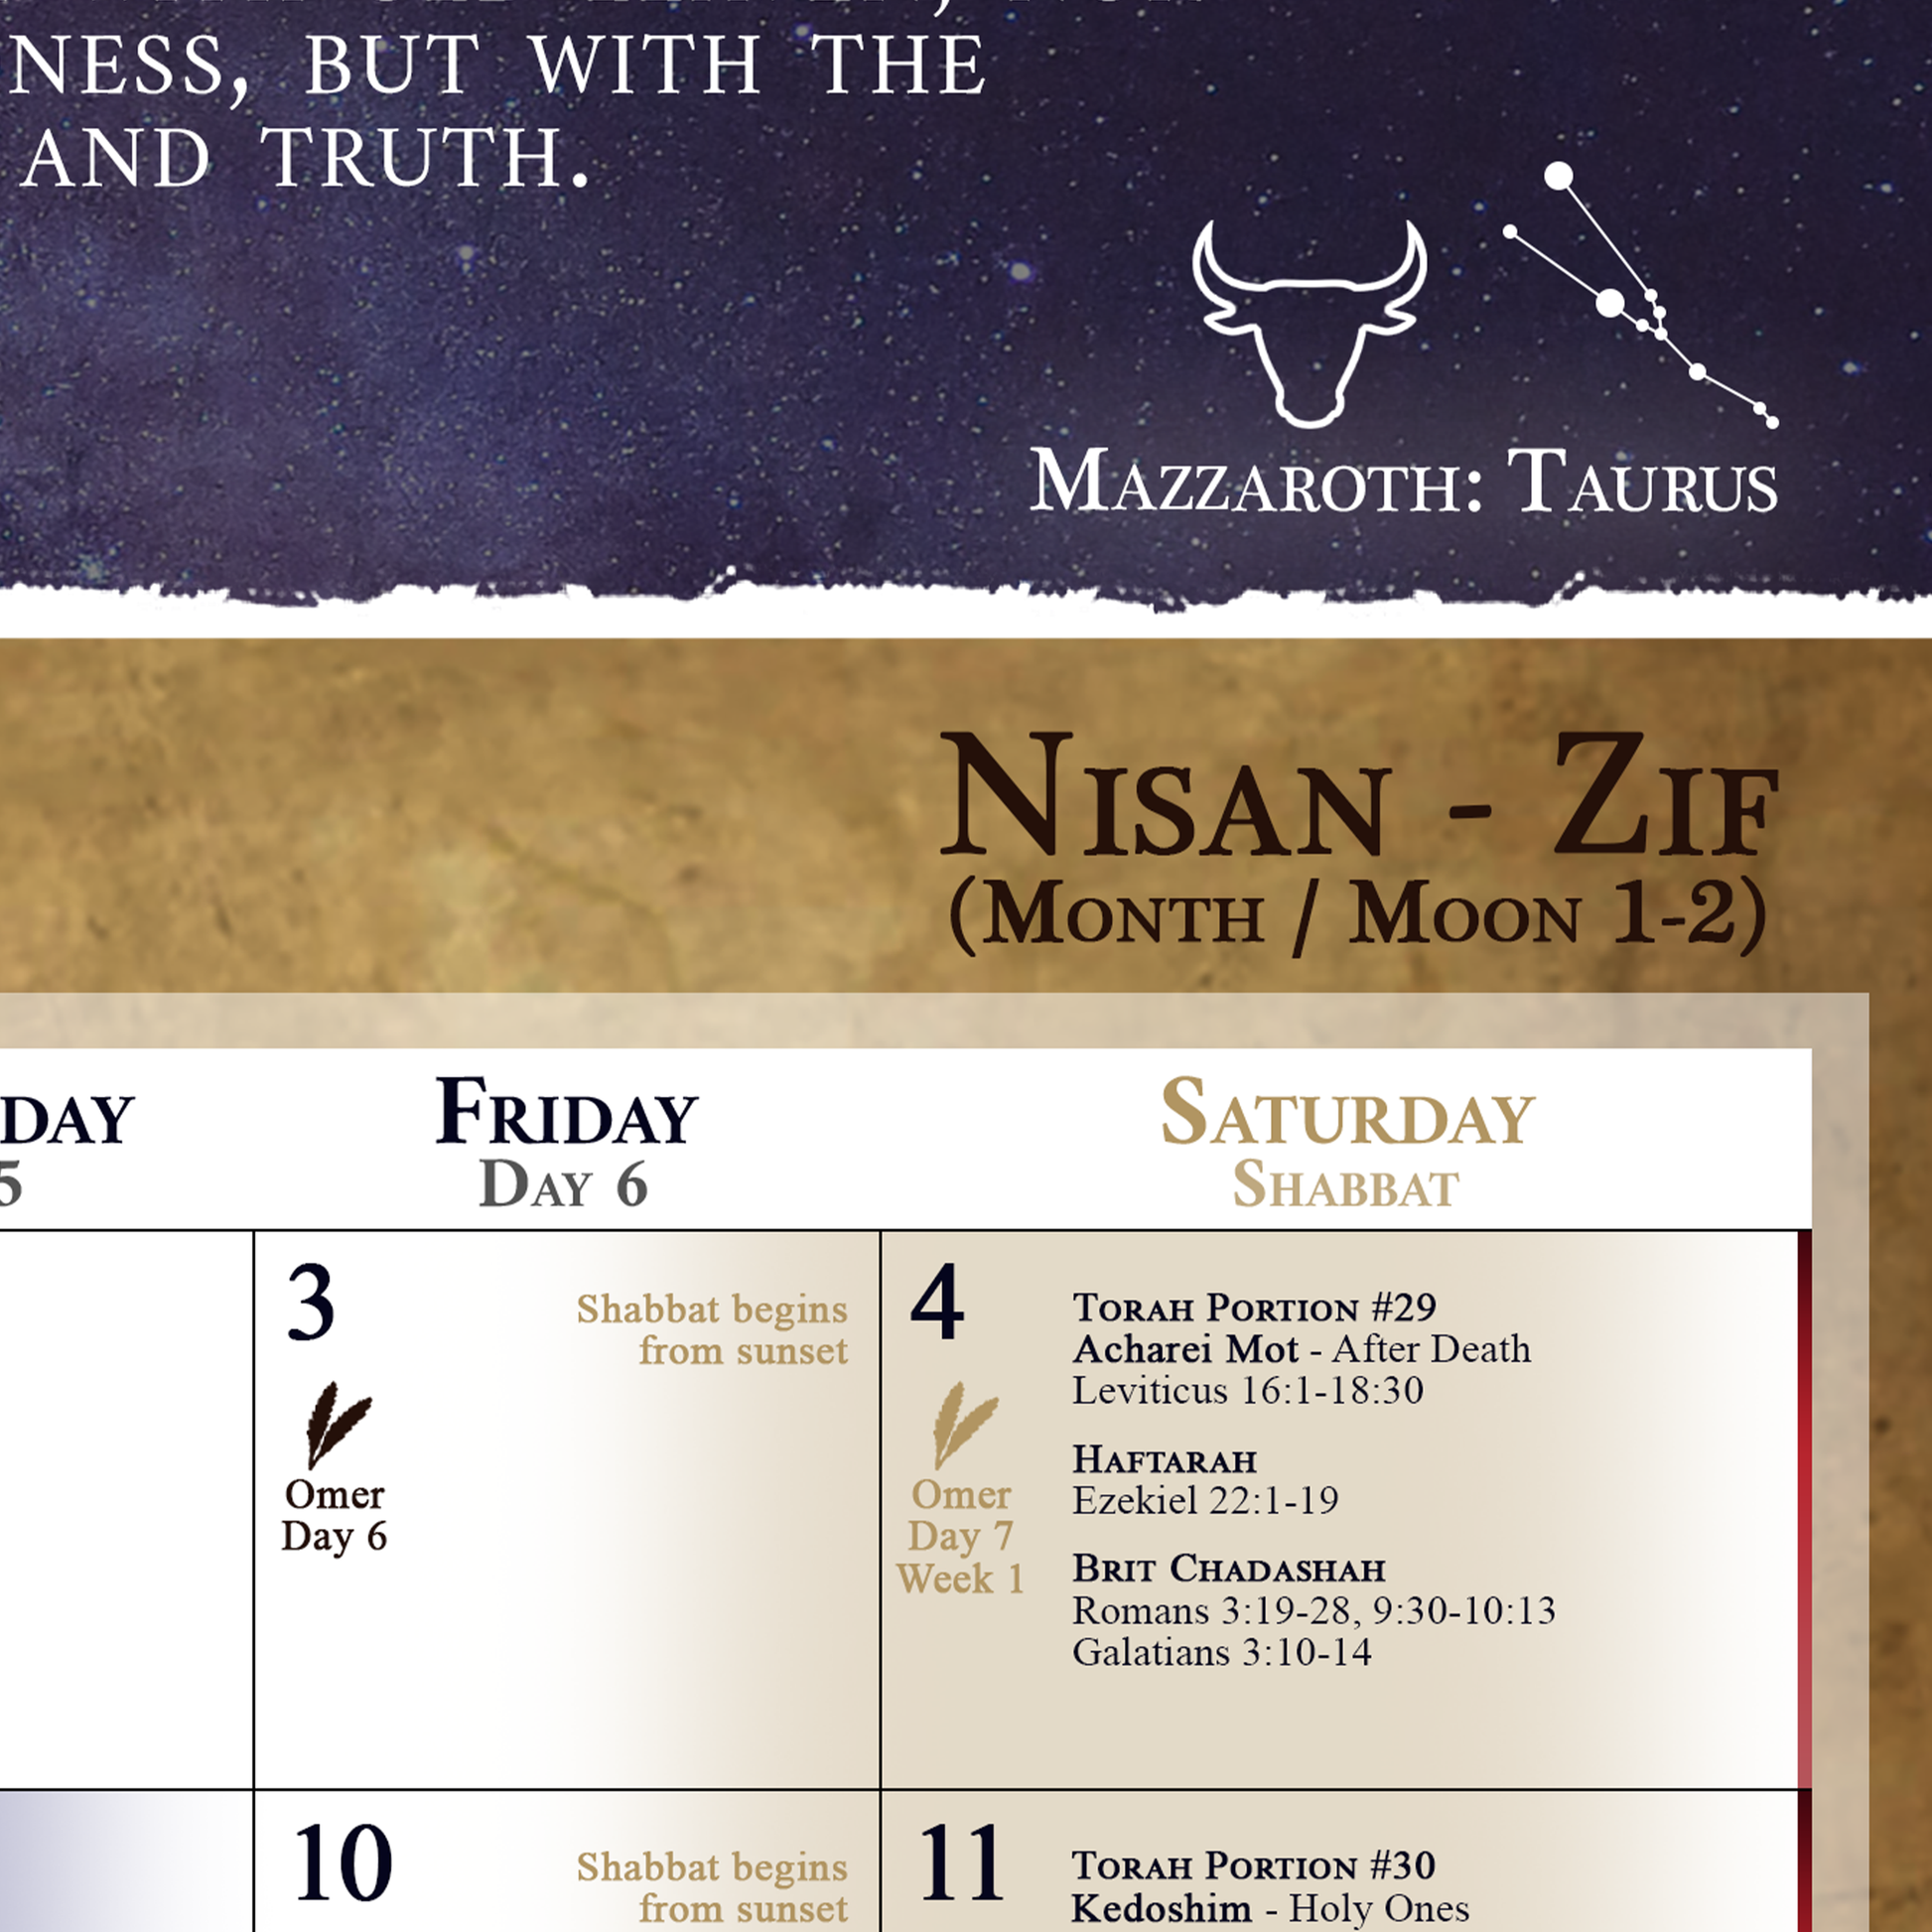 YHWH's Feast Days, New Moon Dates, Shabbat Torah Portion Schedule, Mazzaroth